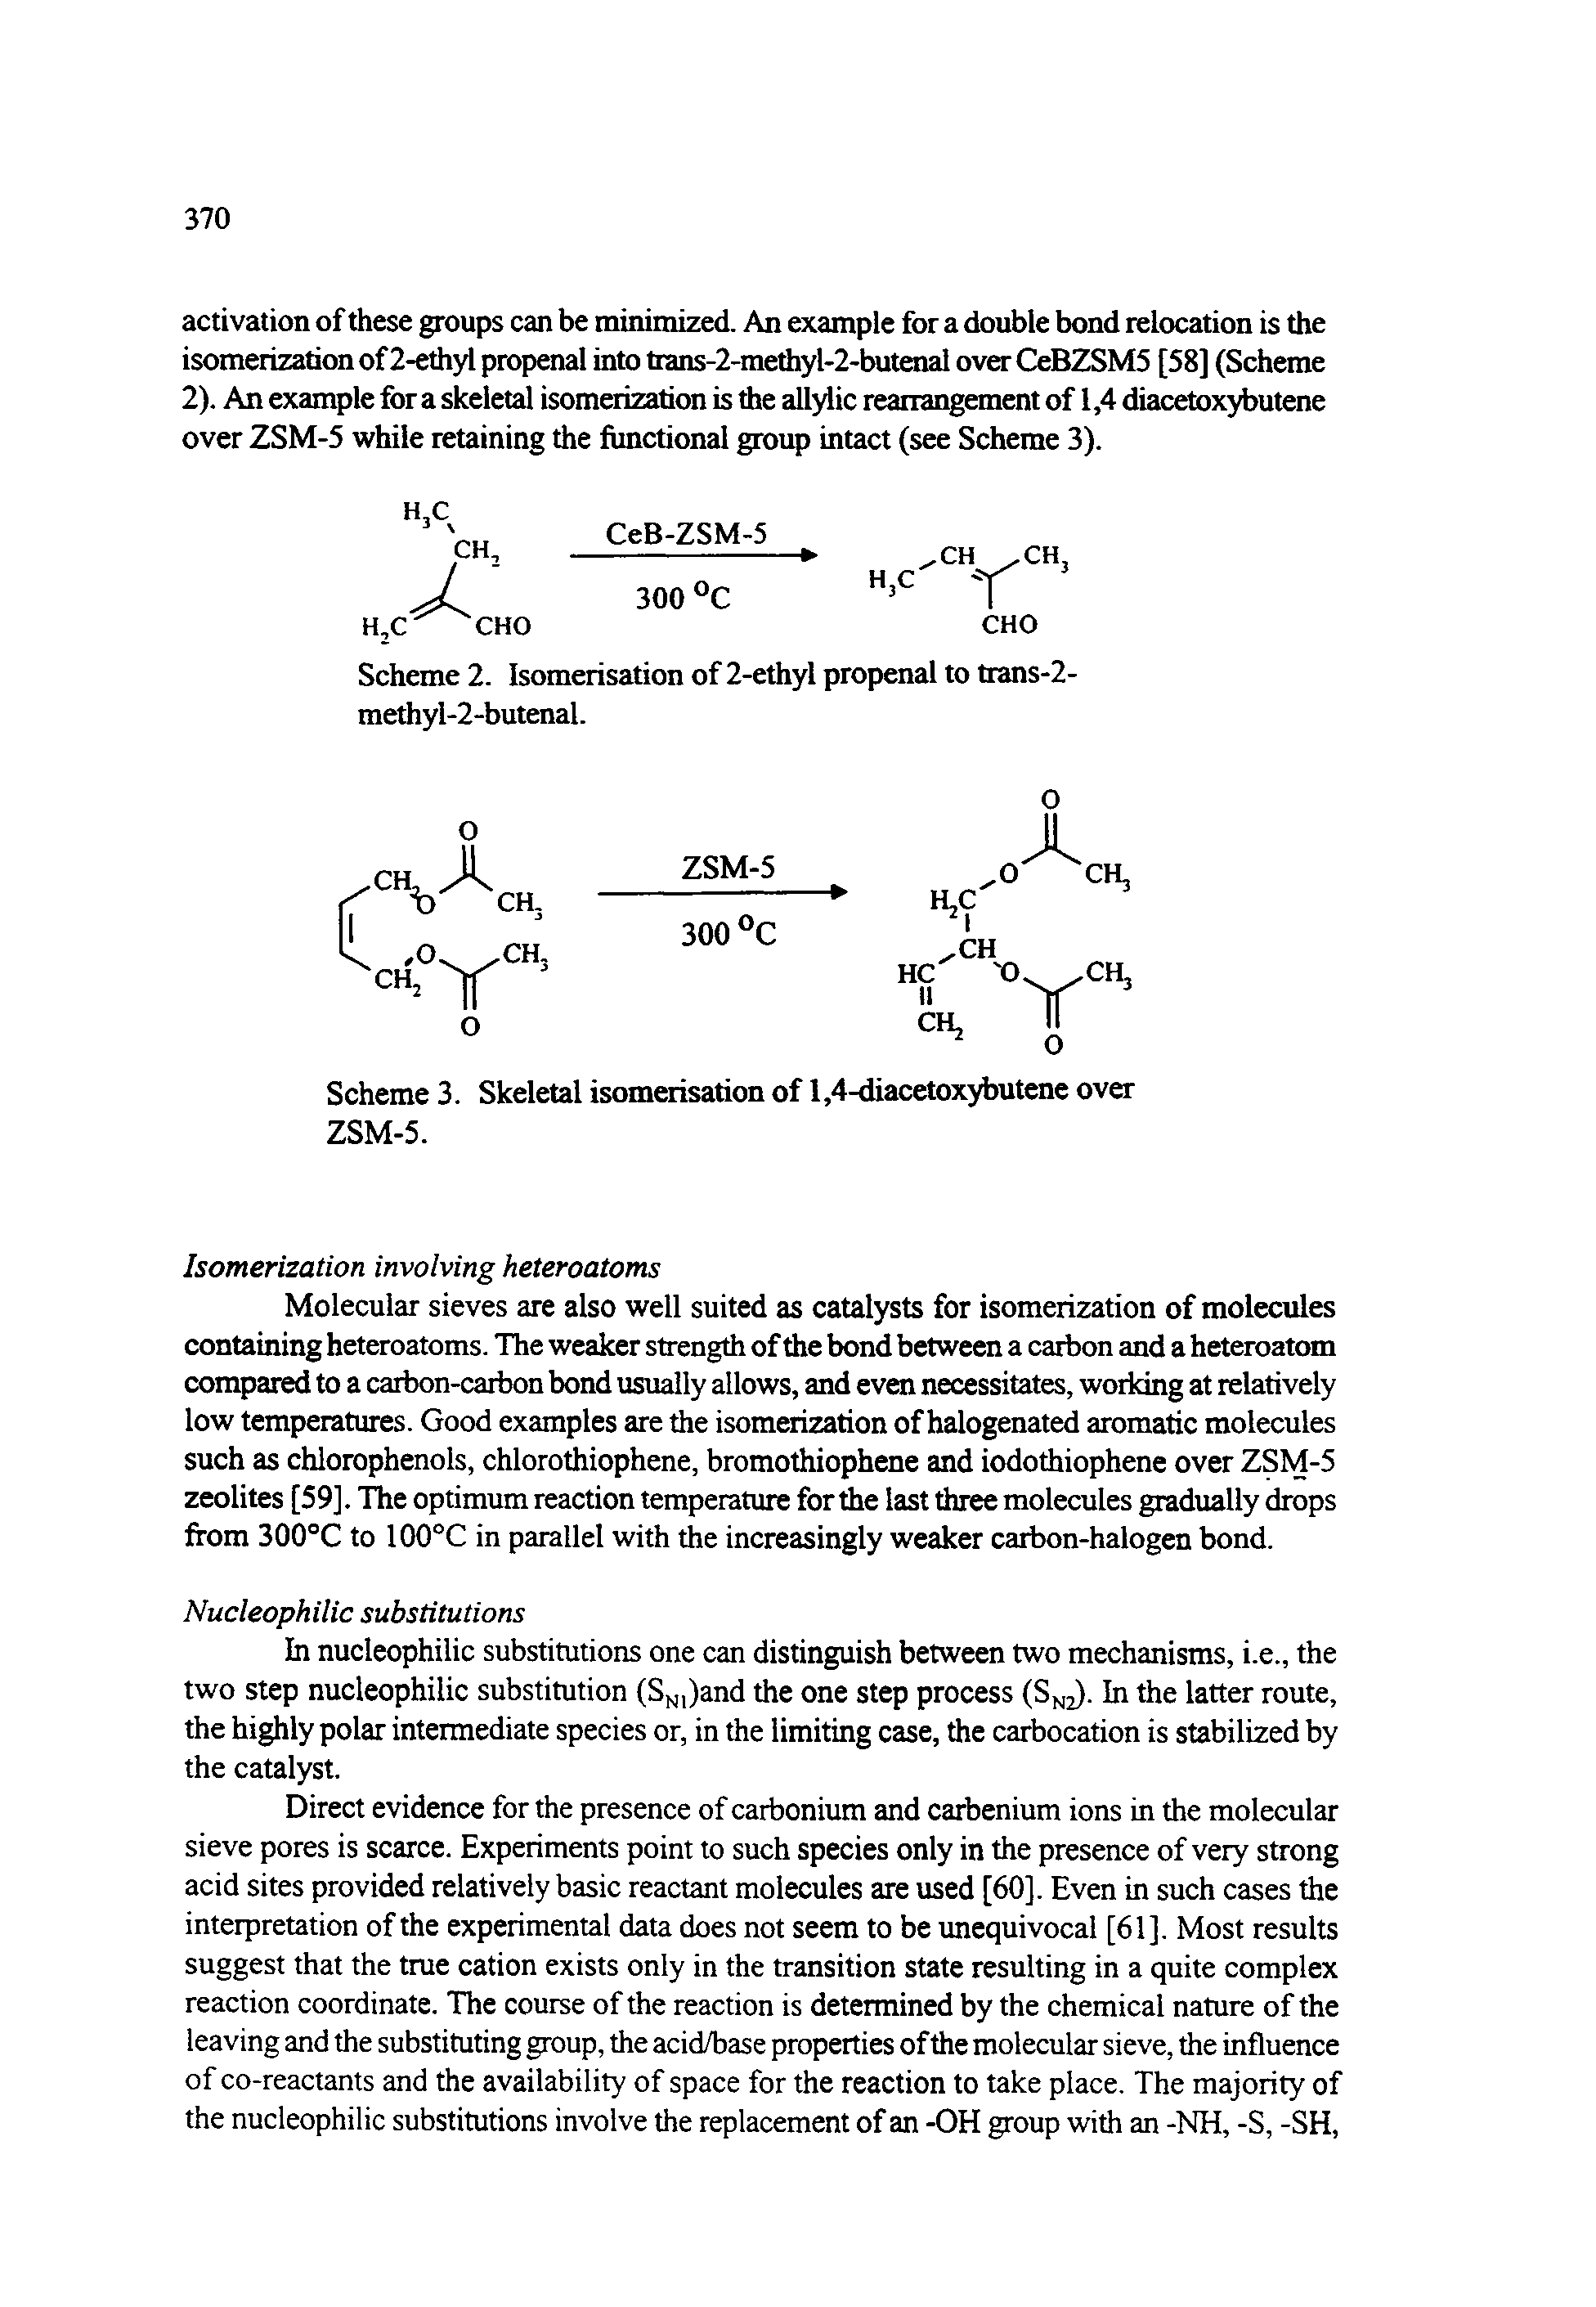 Scheme 2. Isomerisation of 2-ethyl propenal to trans-2-methyl-2-butenal.